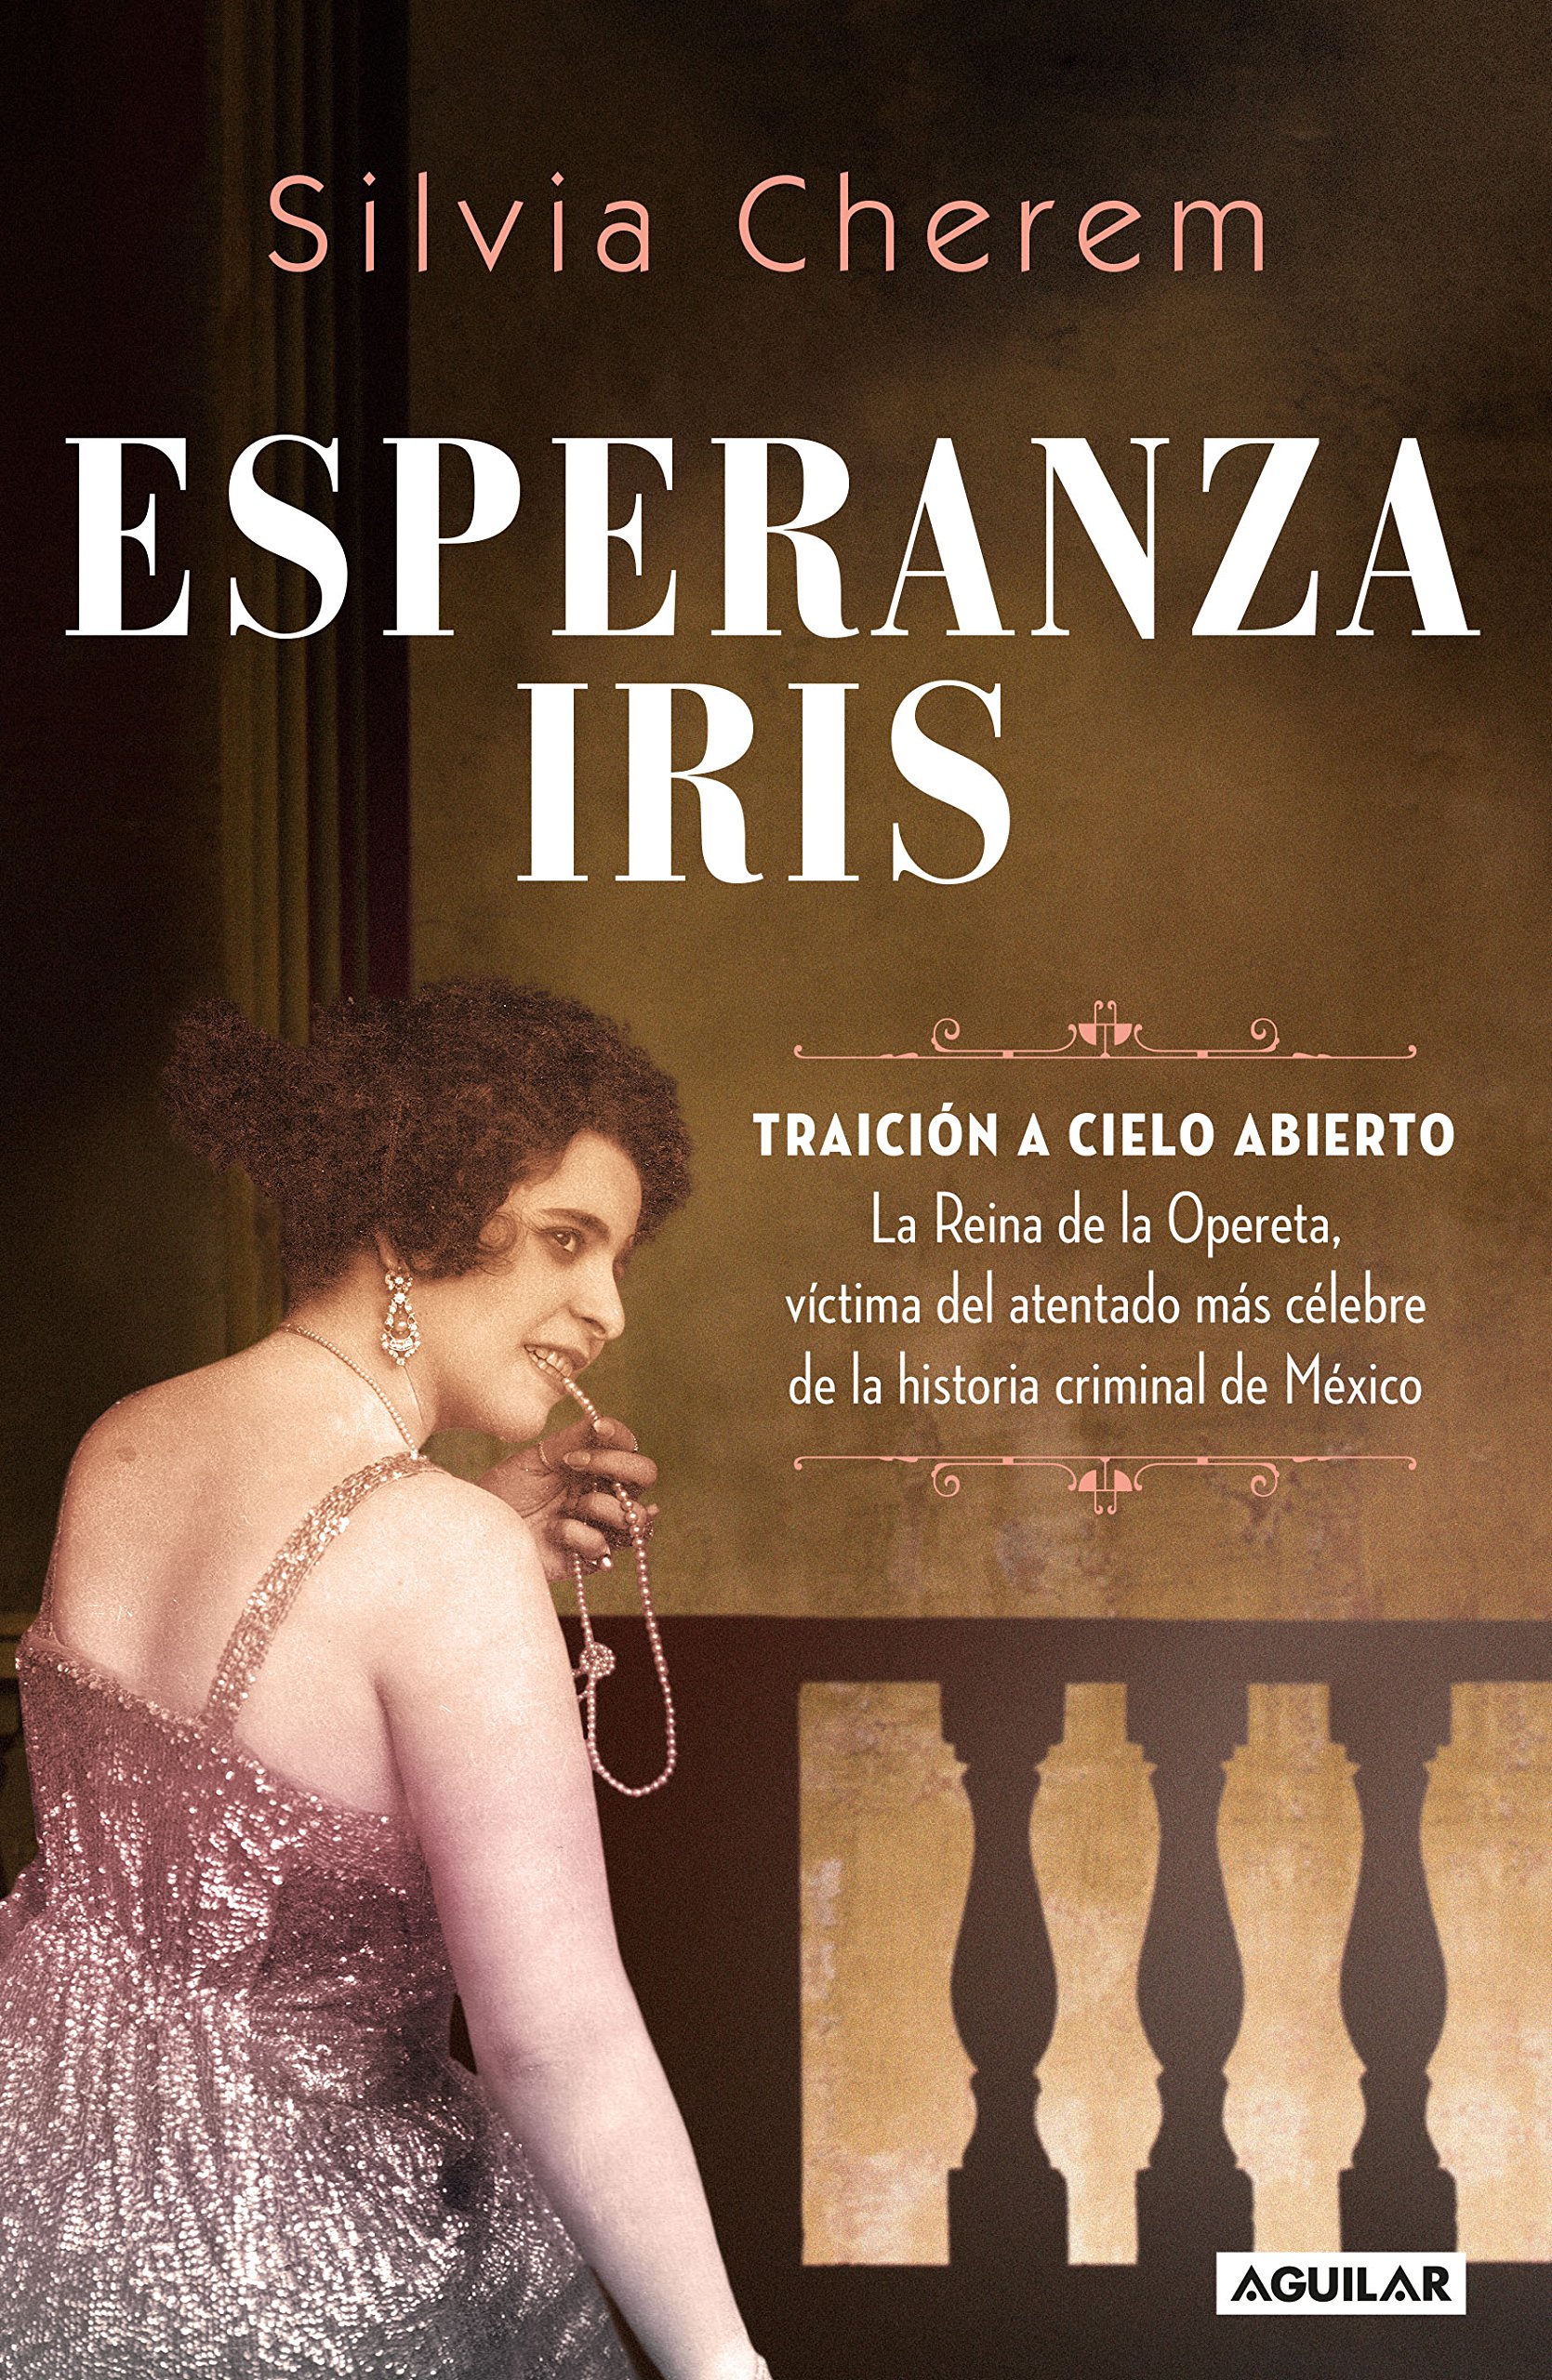 Libro Esperanza Iris por Silvia Cherem